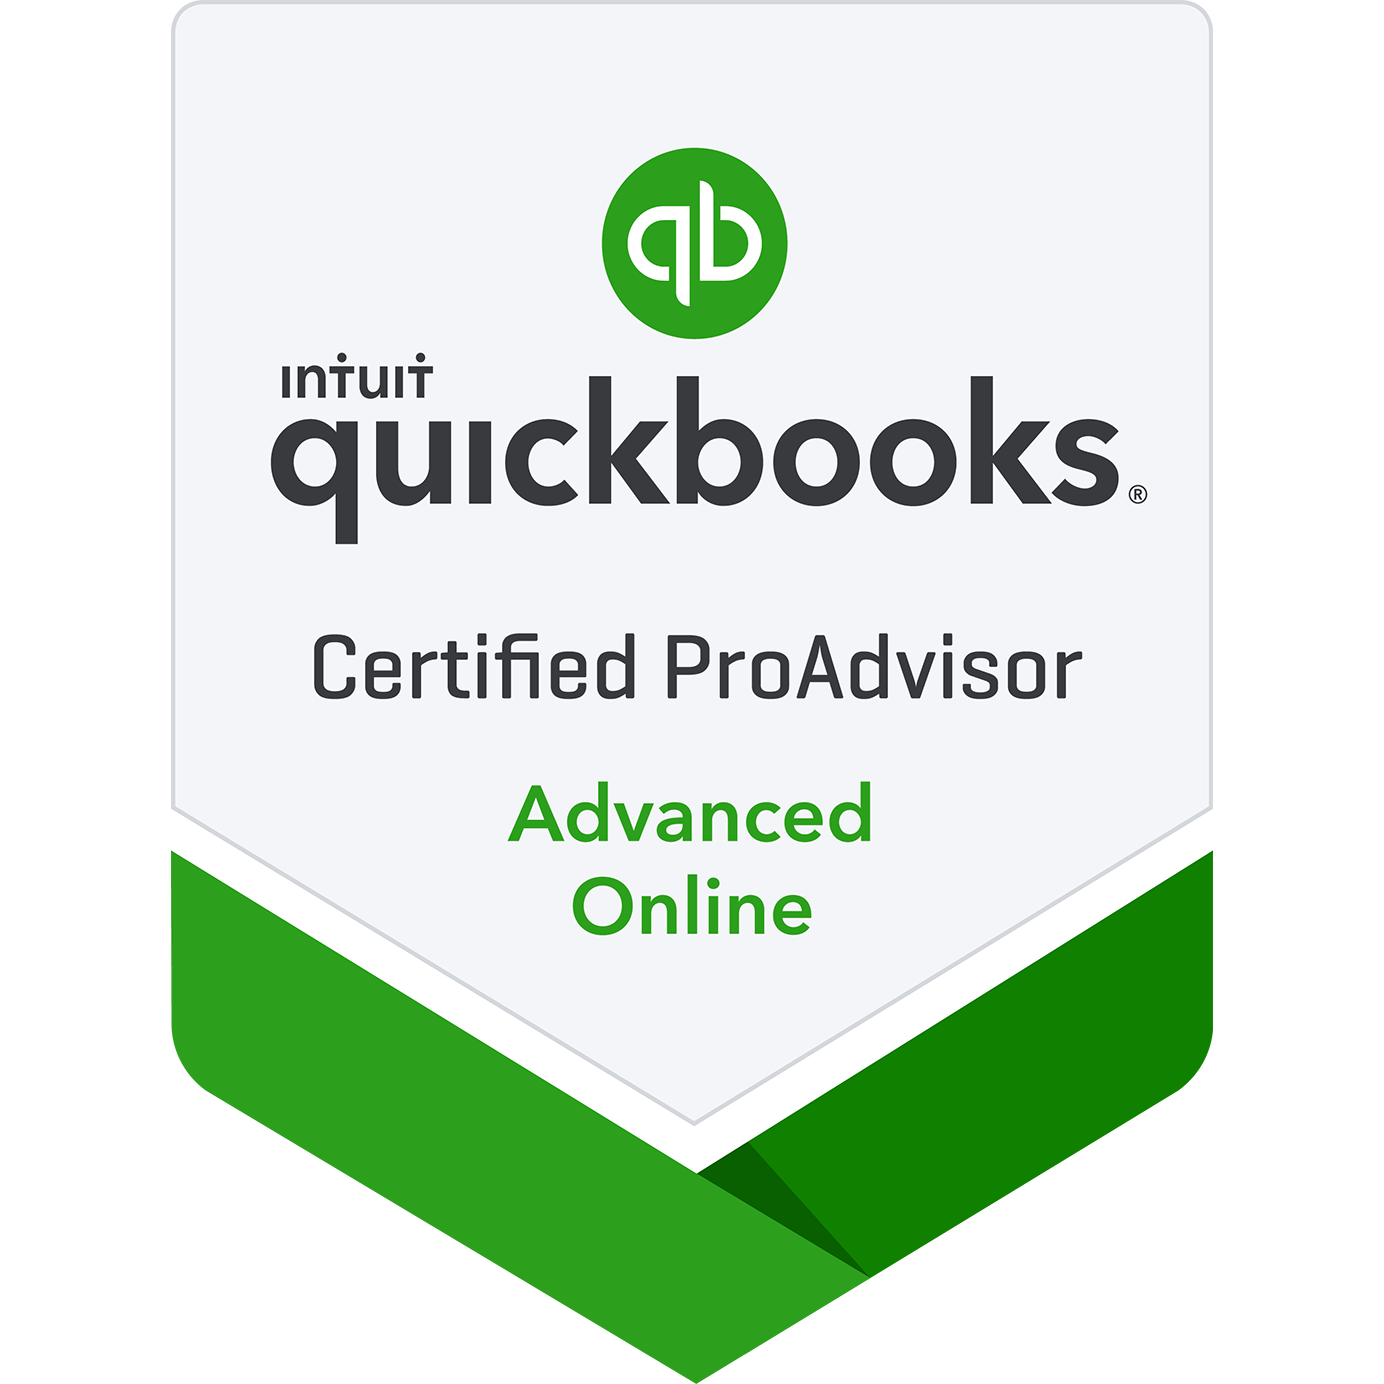 quickbooks-proadvisor-advanced